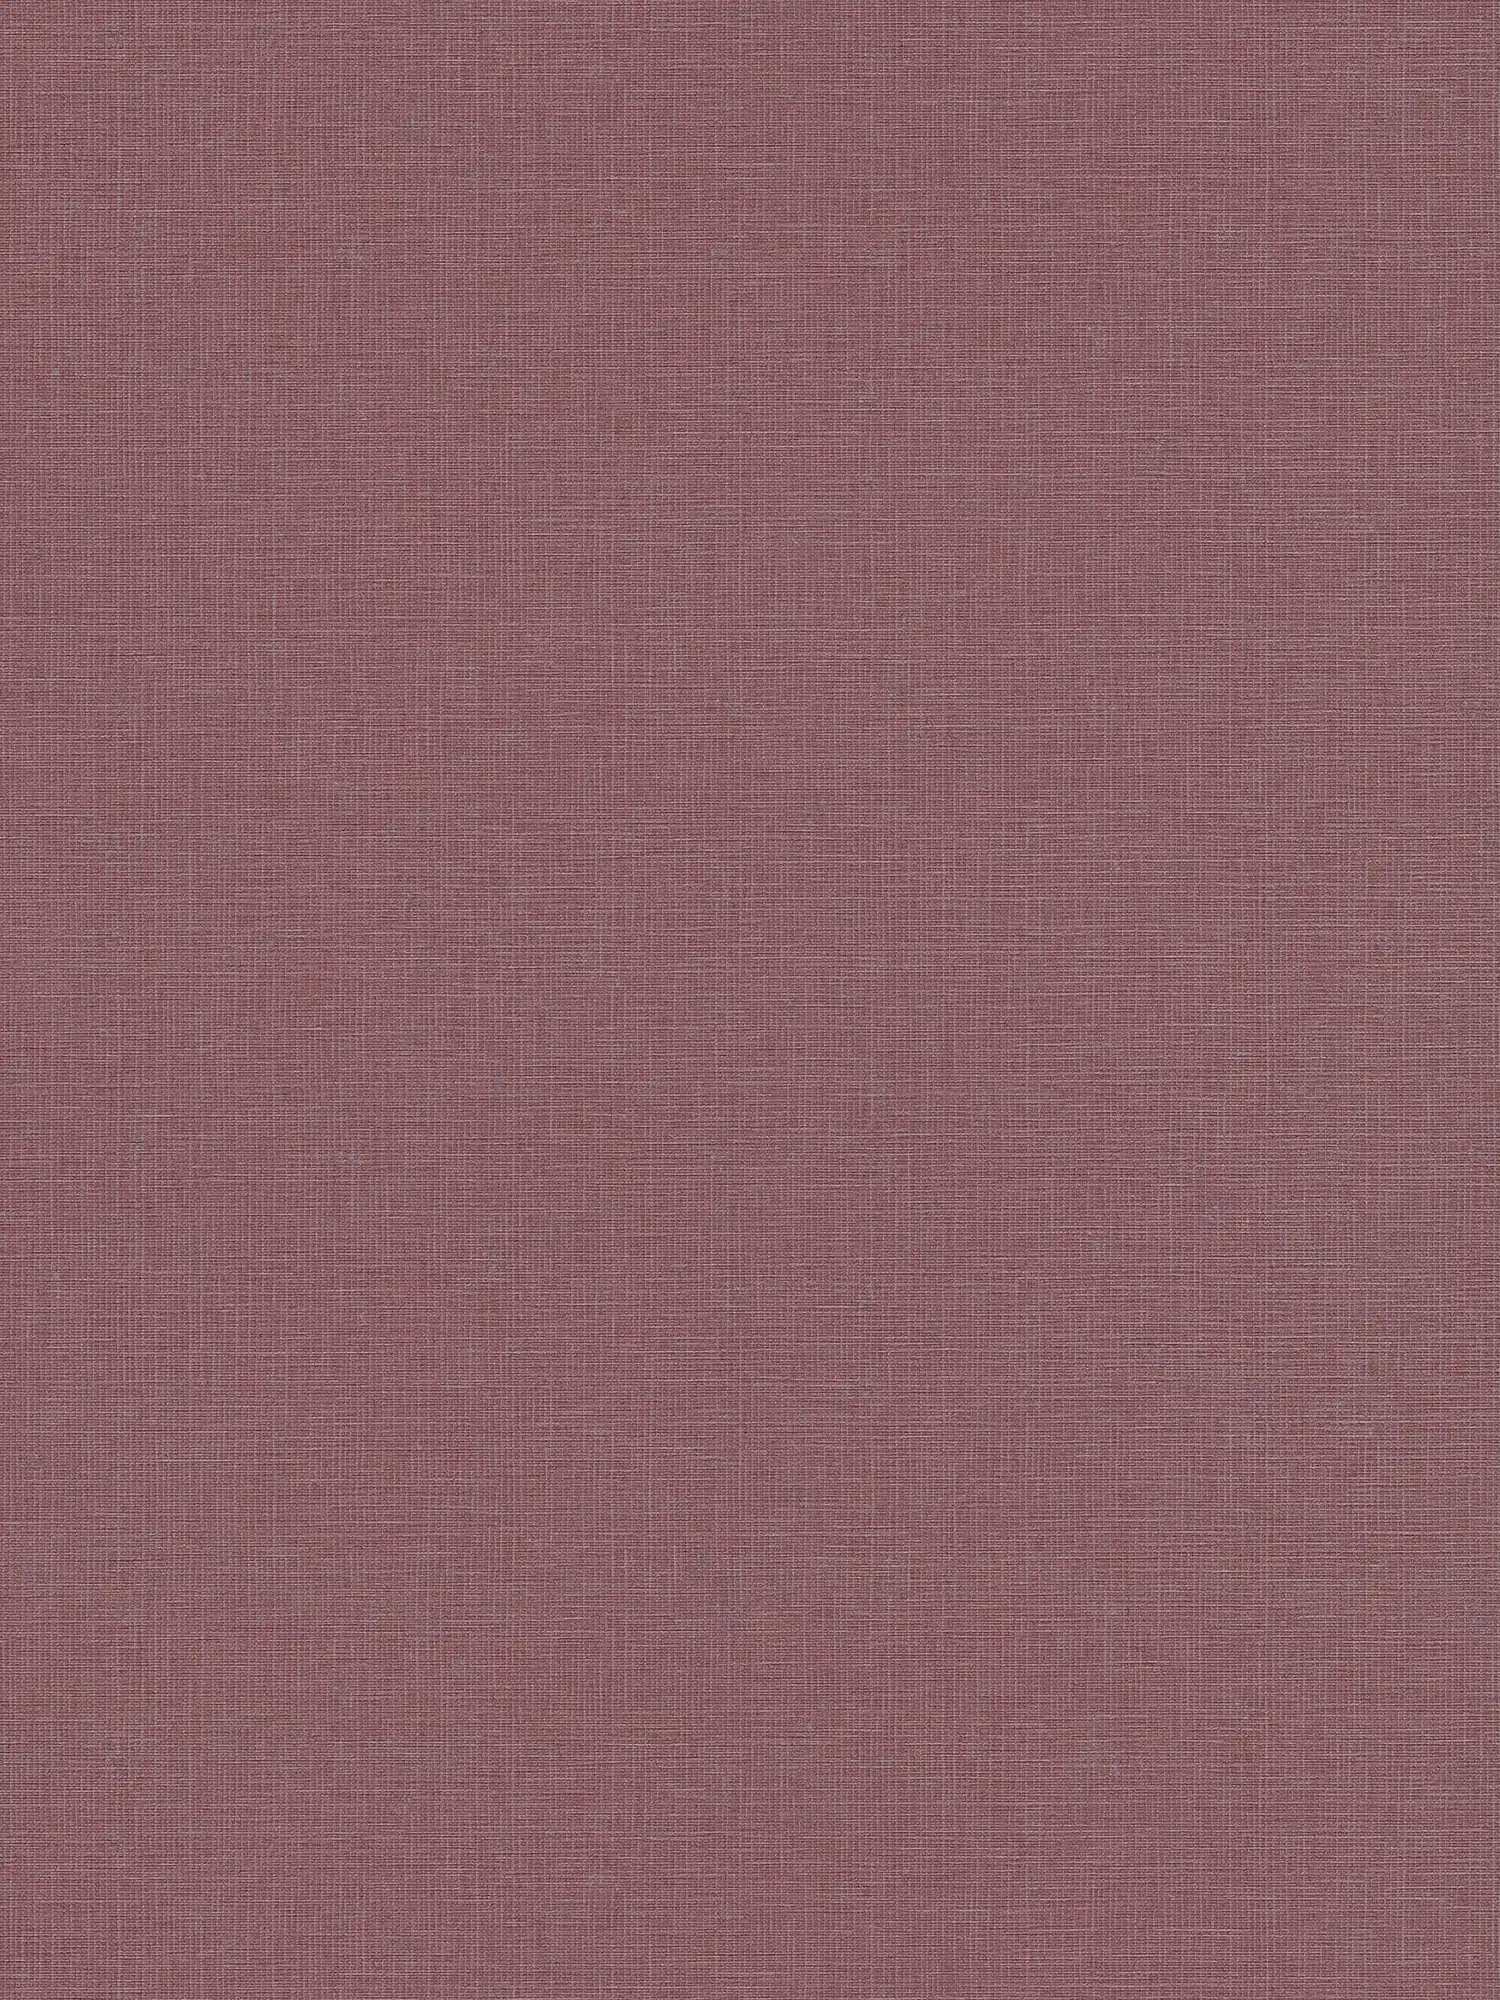 Plain non-woven wallpaper with linen texture - red
